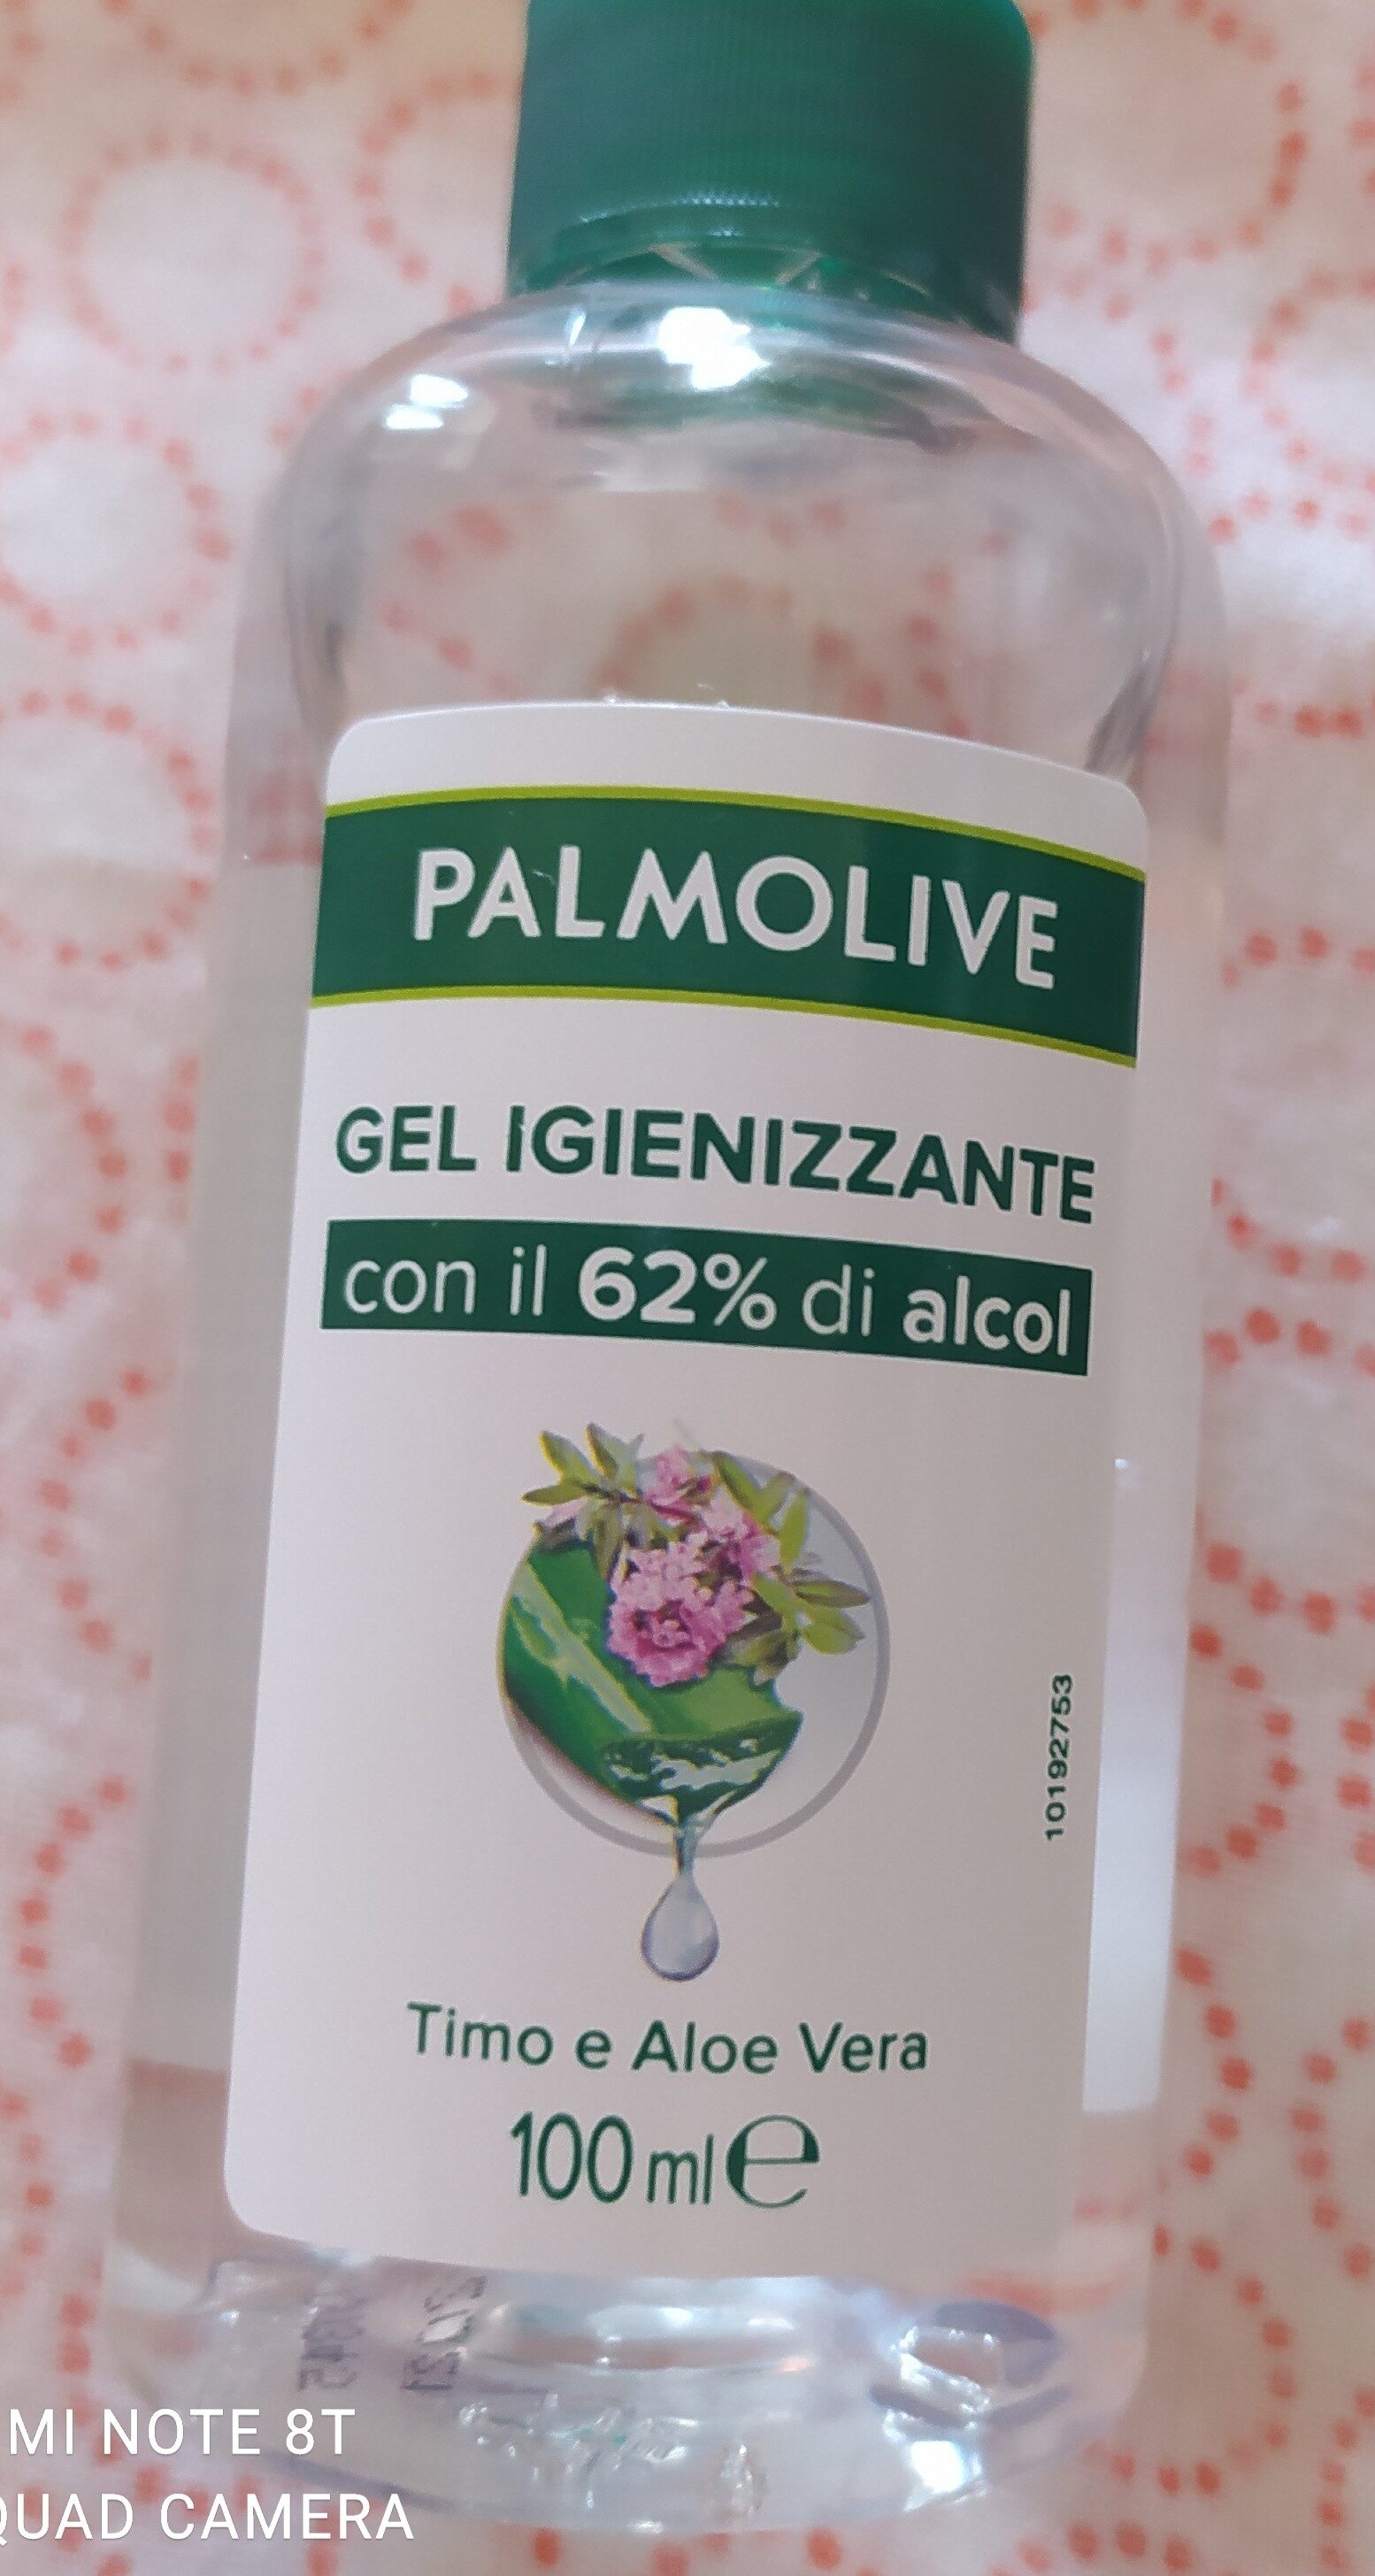 Palmolive - Ingrédients - ar